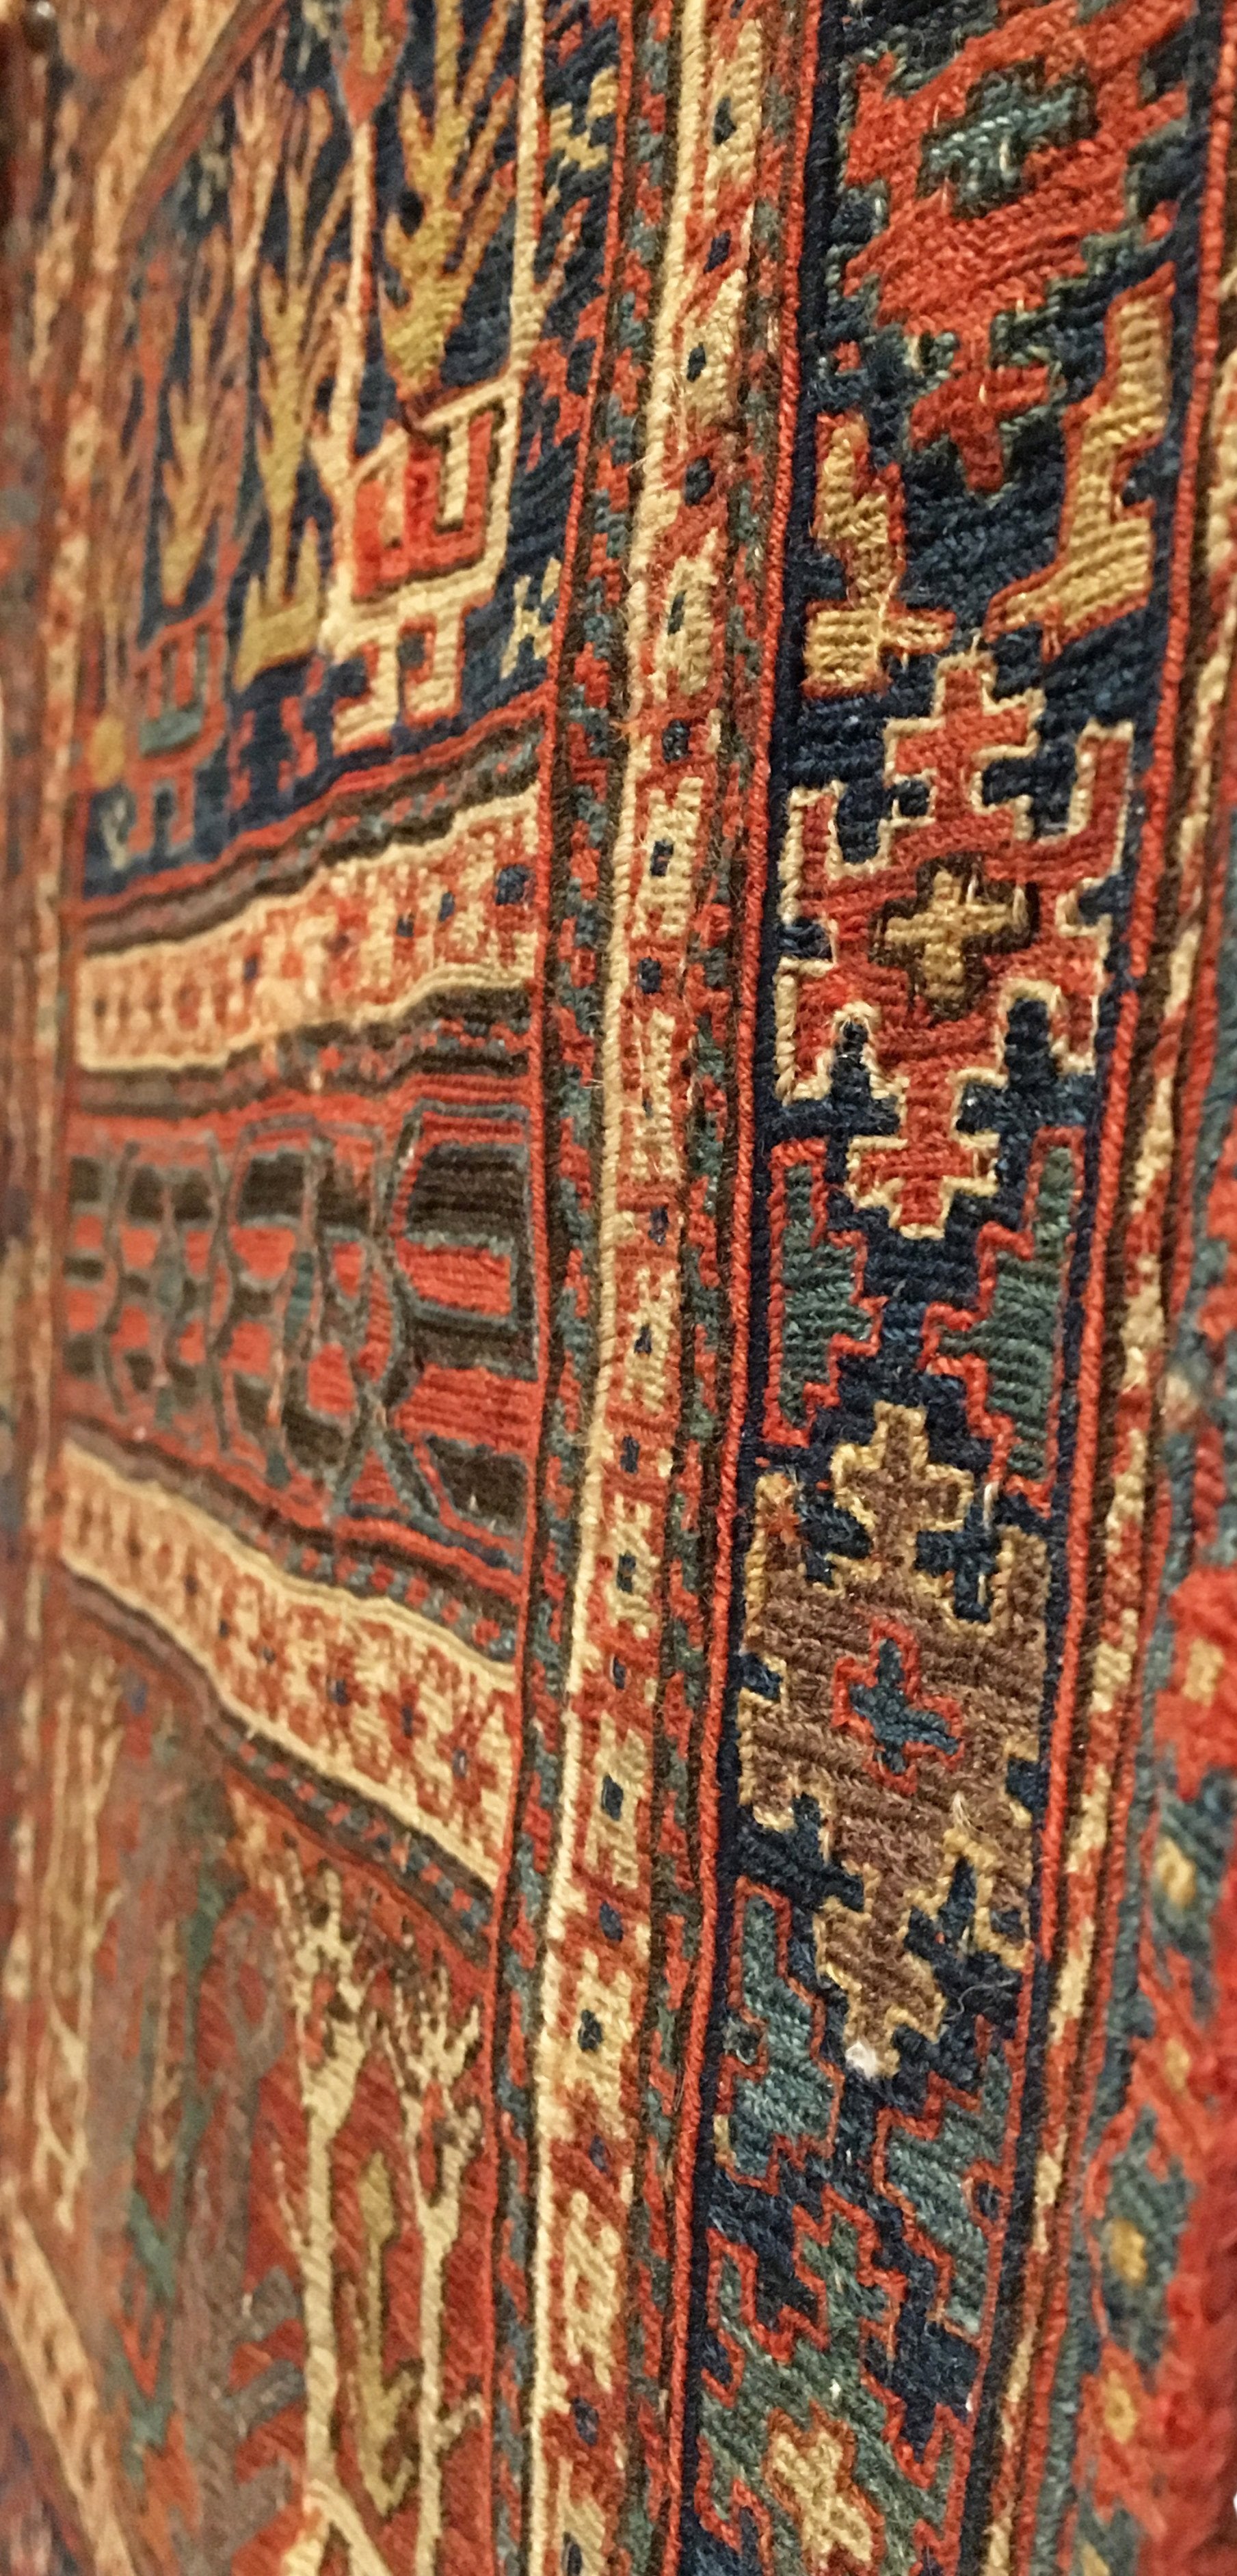 1'10 x 1'11 Antique Persian Shahsavan Small Square Rug [TAK0046]